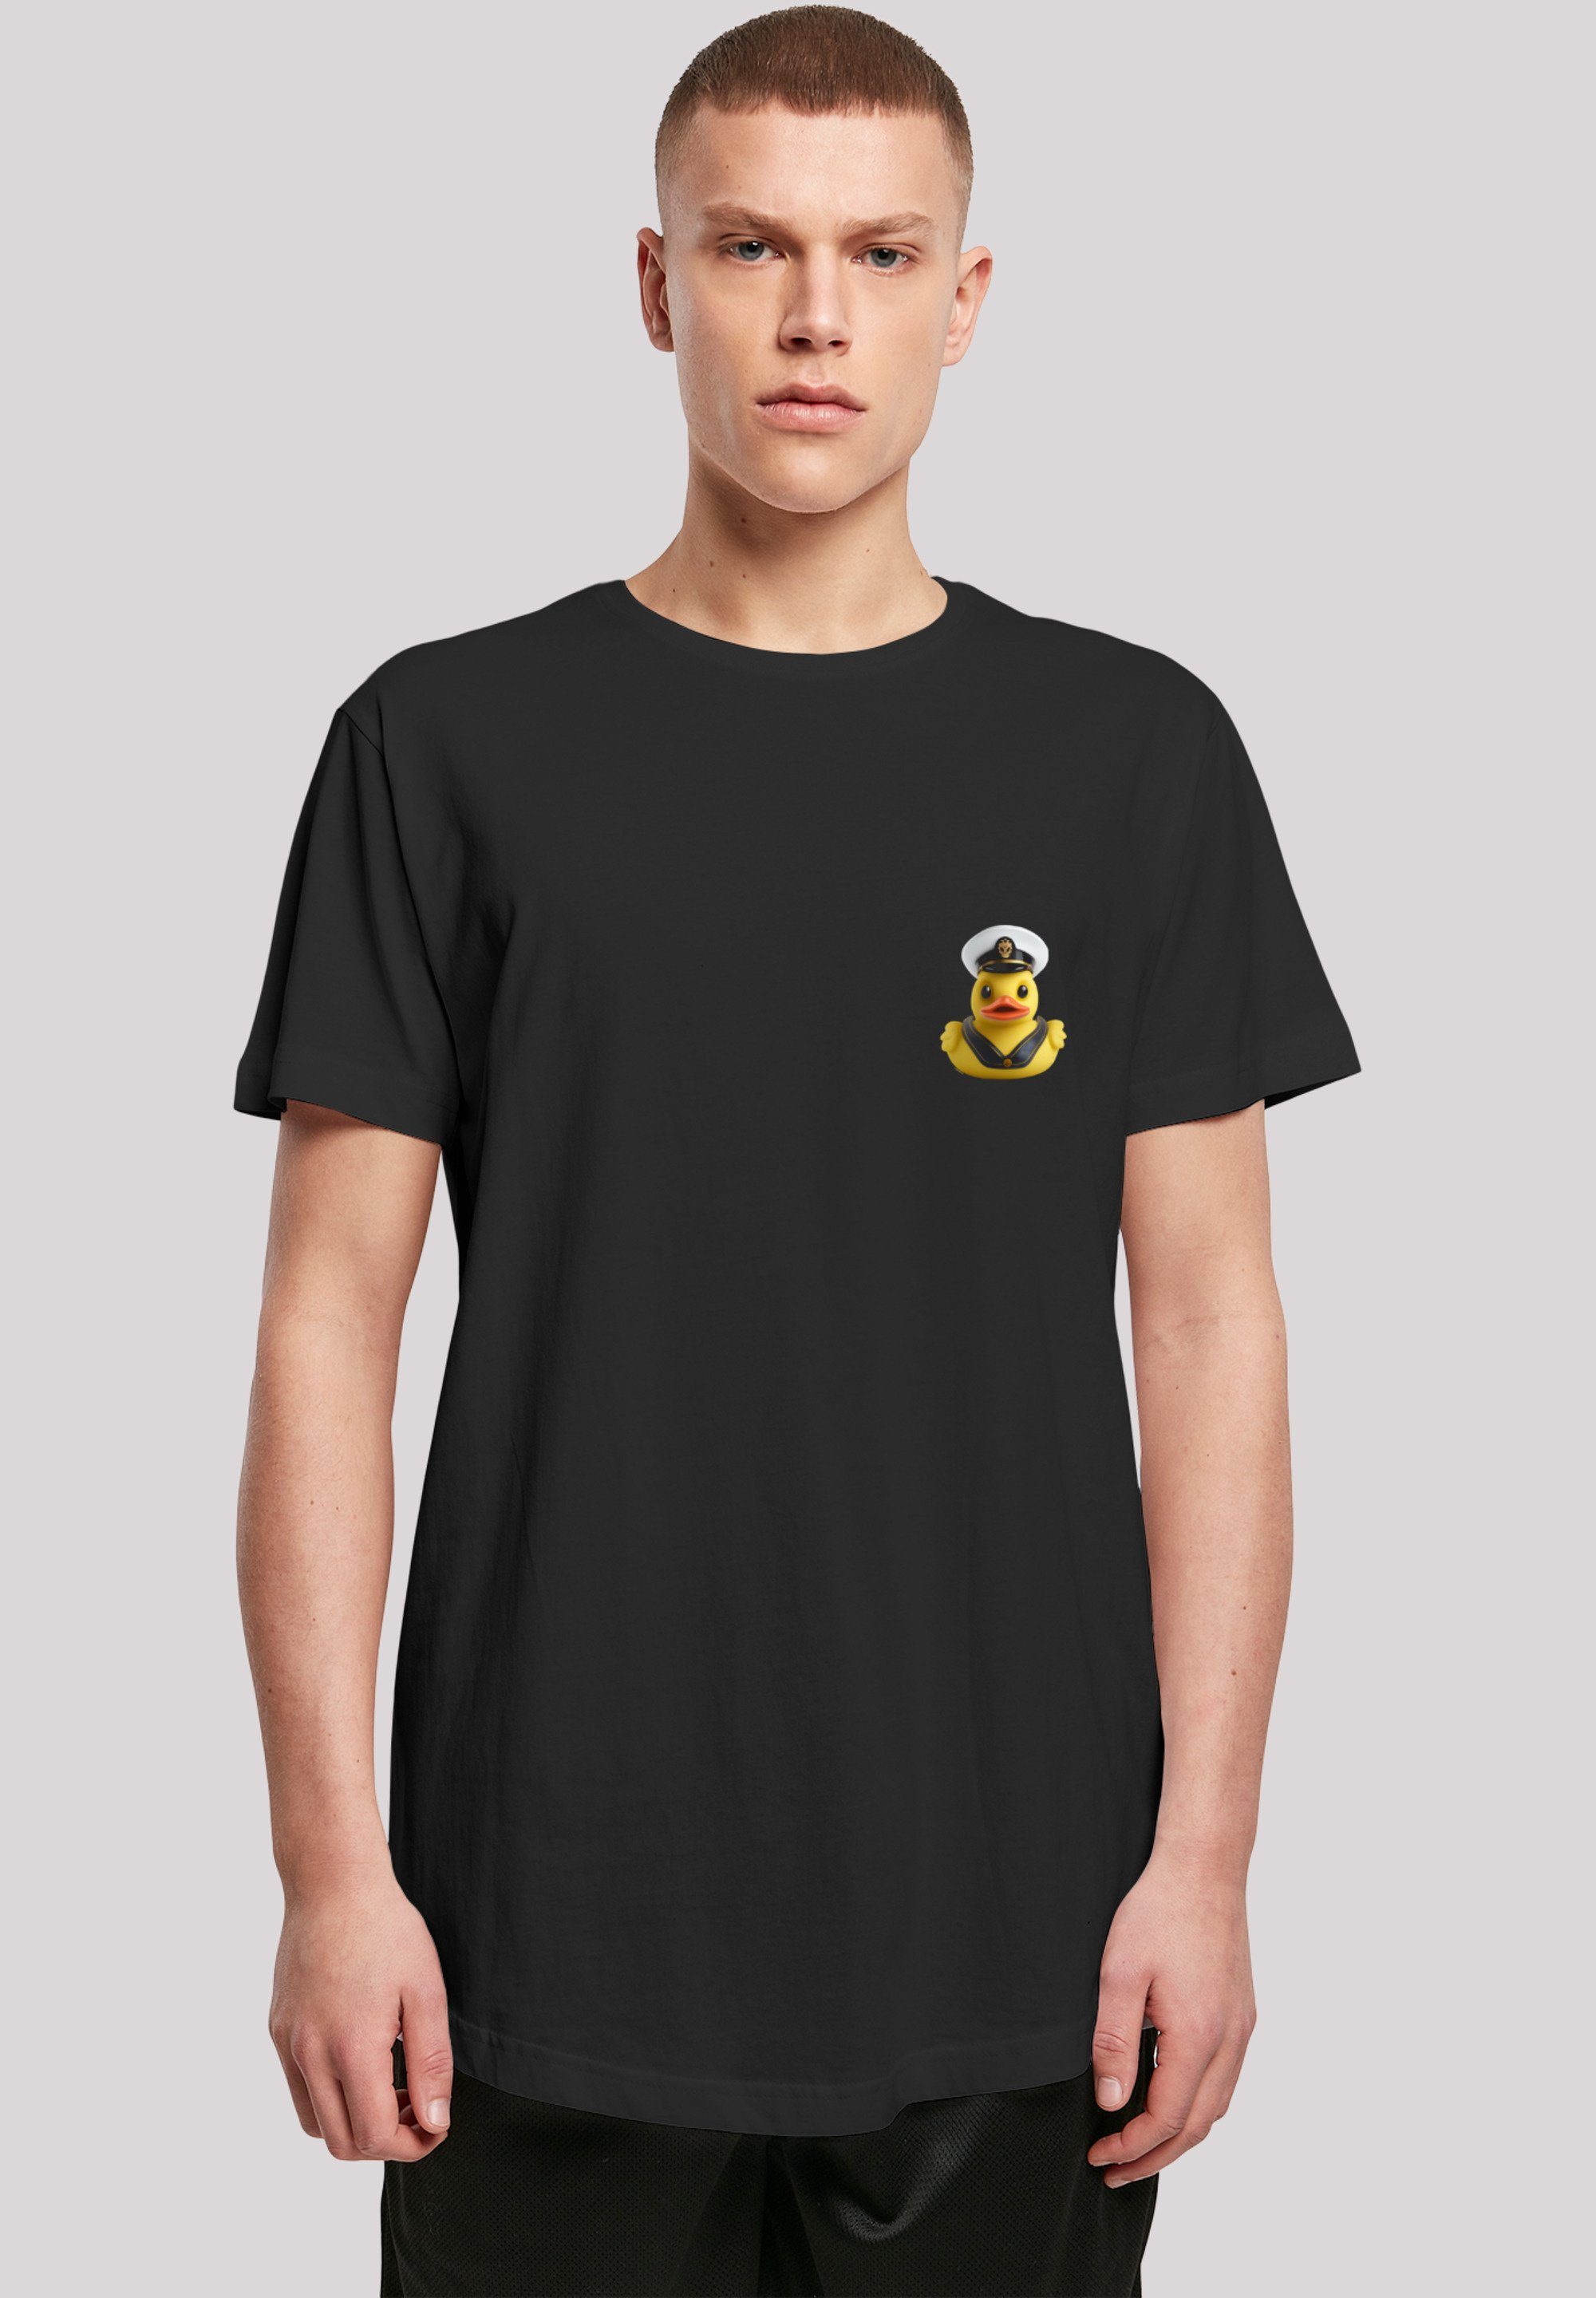 Long Print T-Shirt Captain schwarz Rubber F4NT4STIC Duck